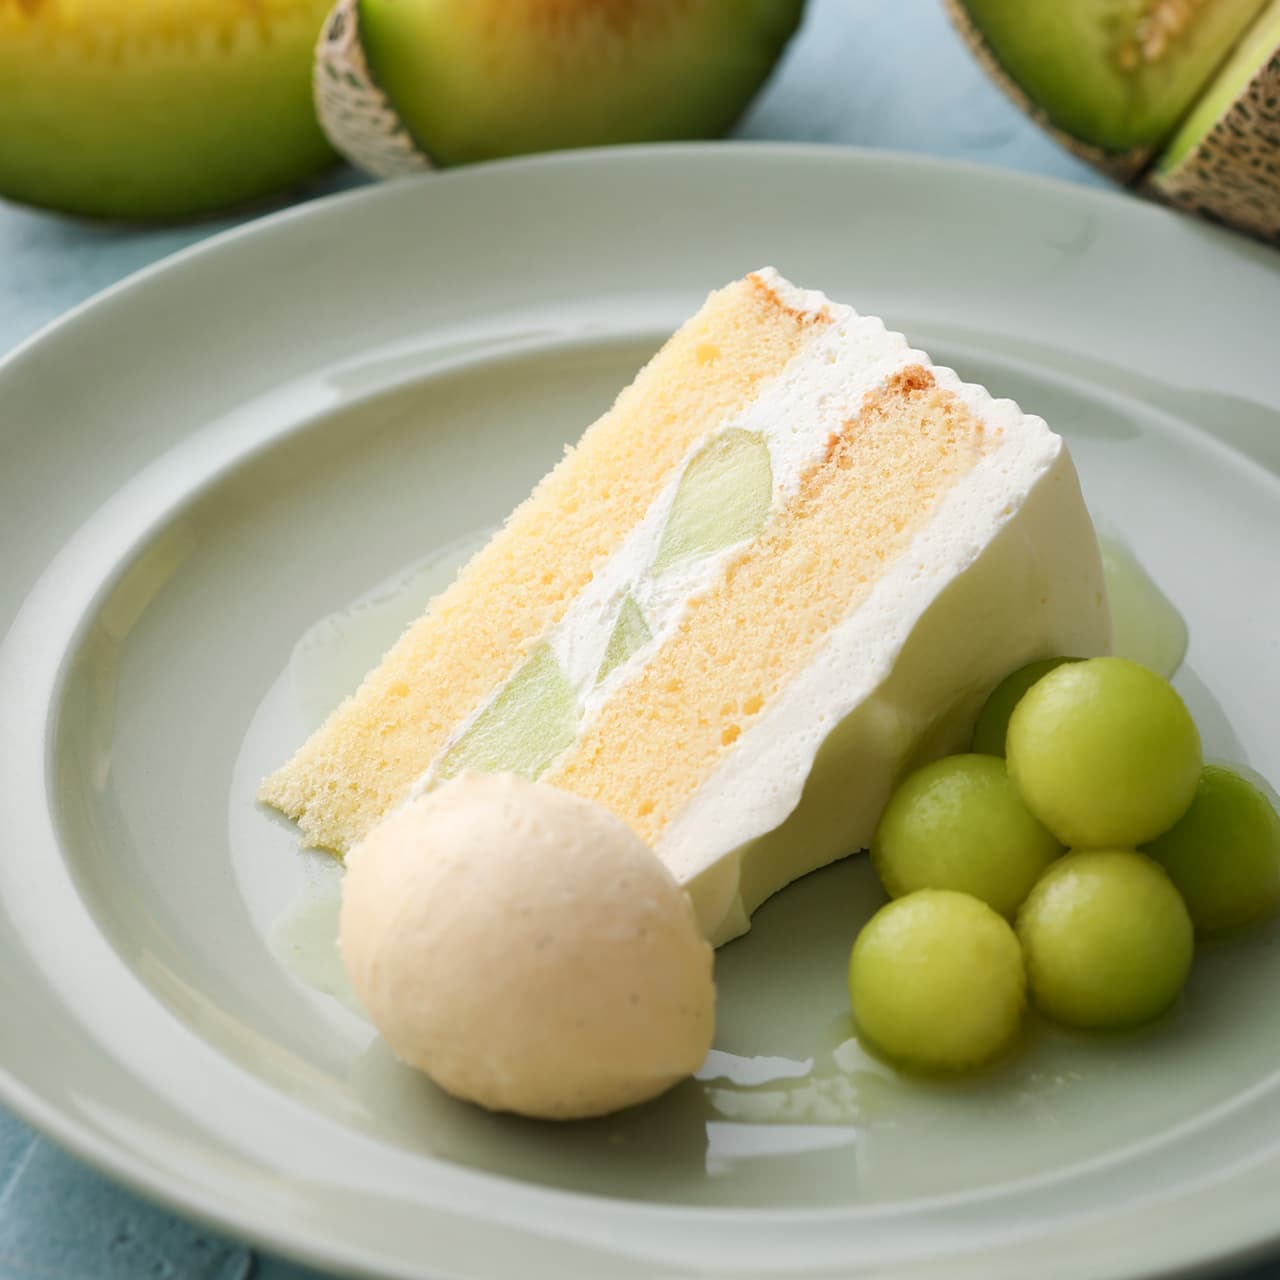 KIHACHI Cafe "Double Melon Parfait", "KIHACHI's Double Melon Pie", "Melon Shortcake with Vanilla Ice Cream